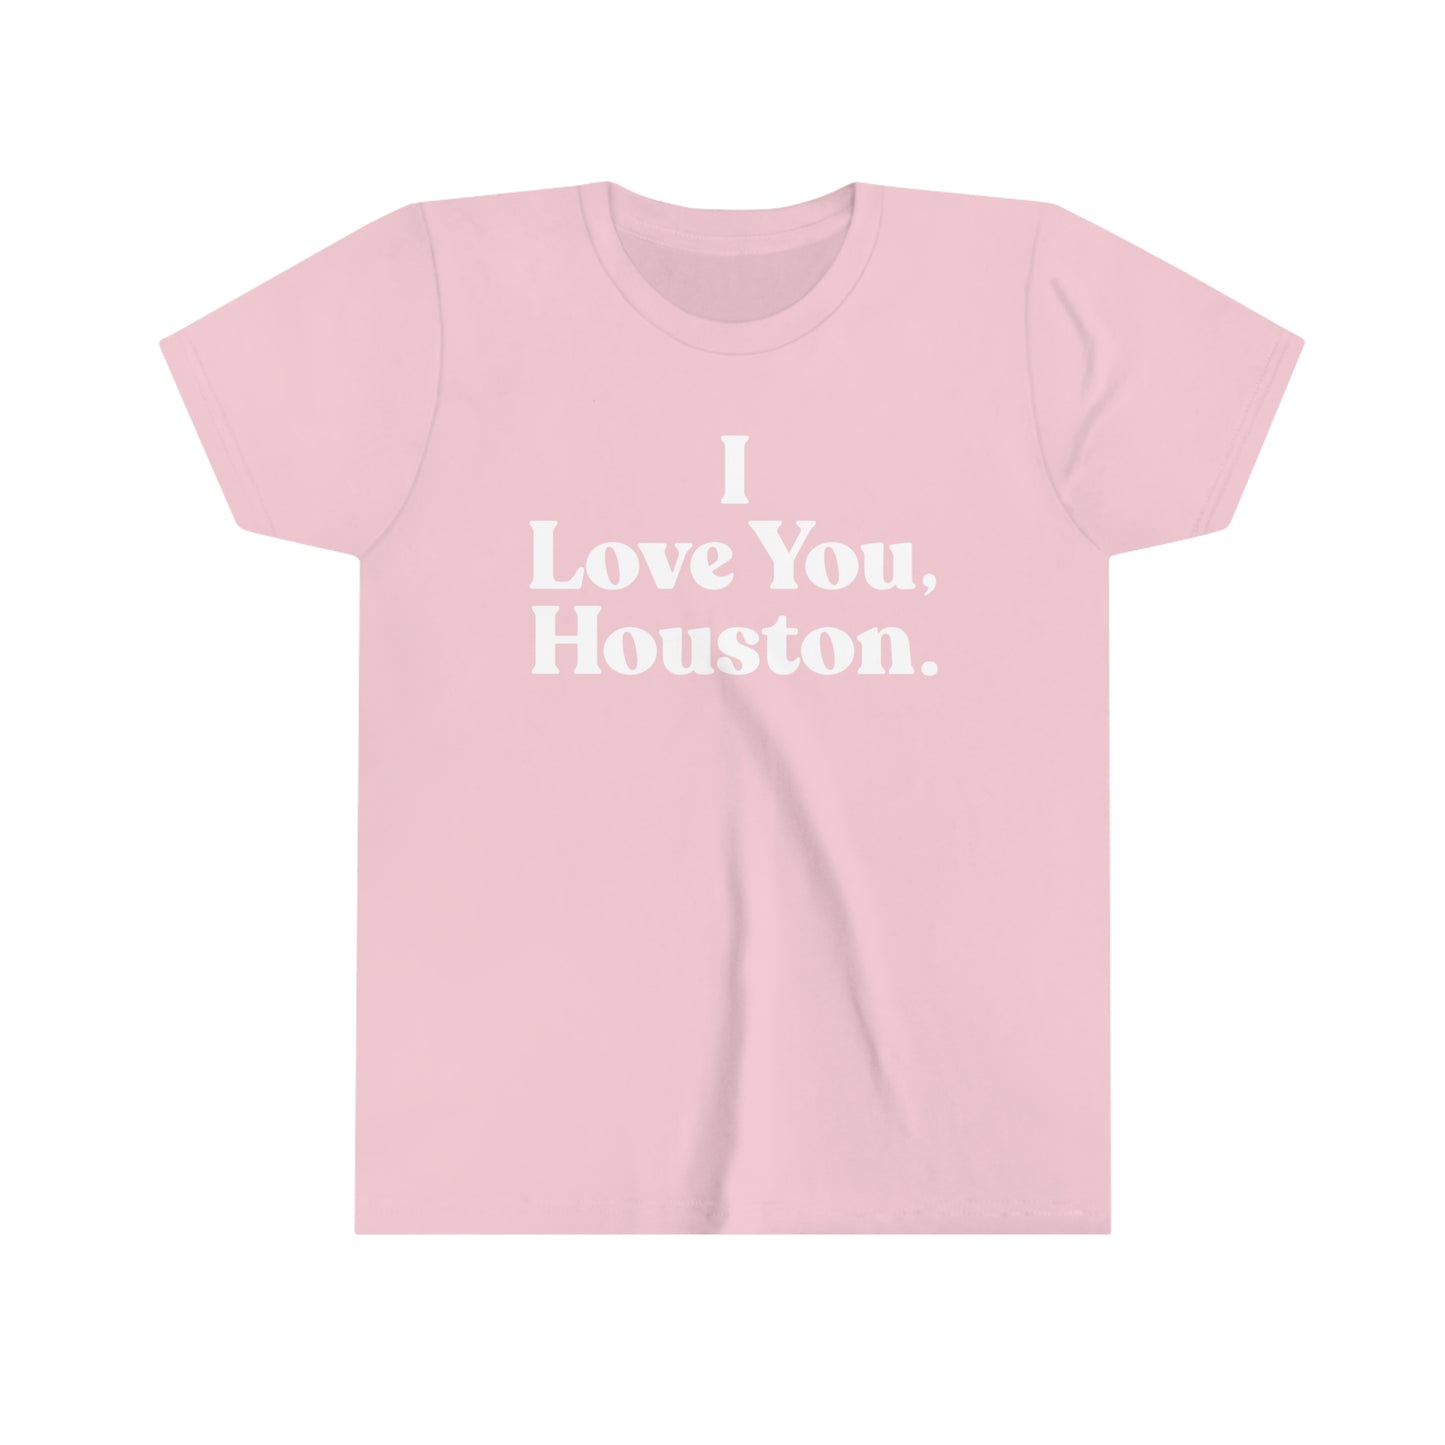 I Love You, Houston Short Sleeve Kids Tee